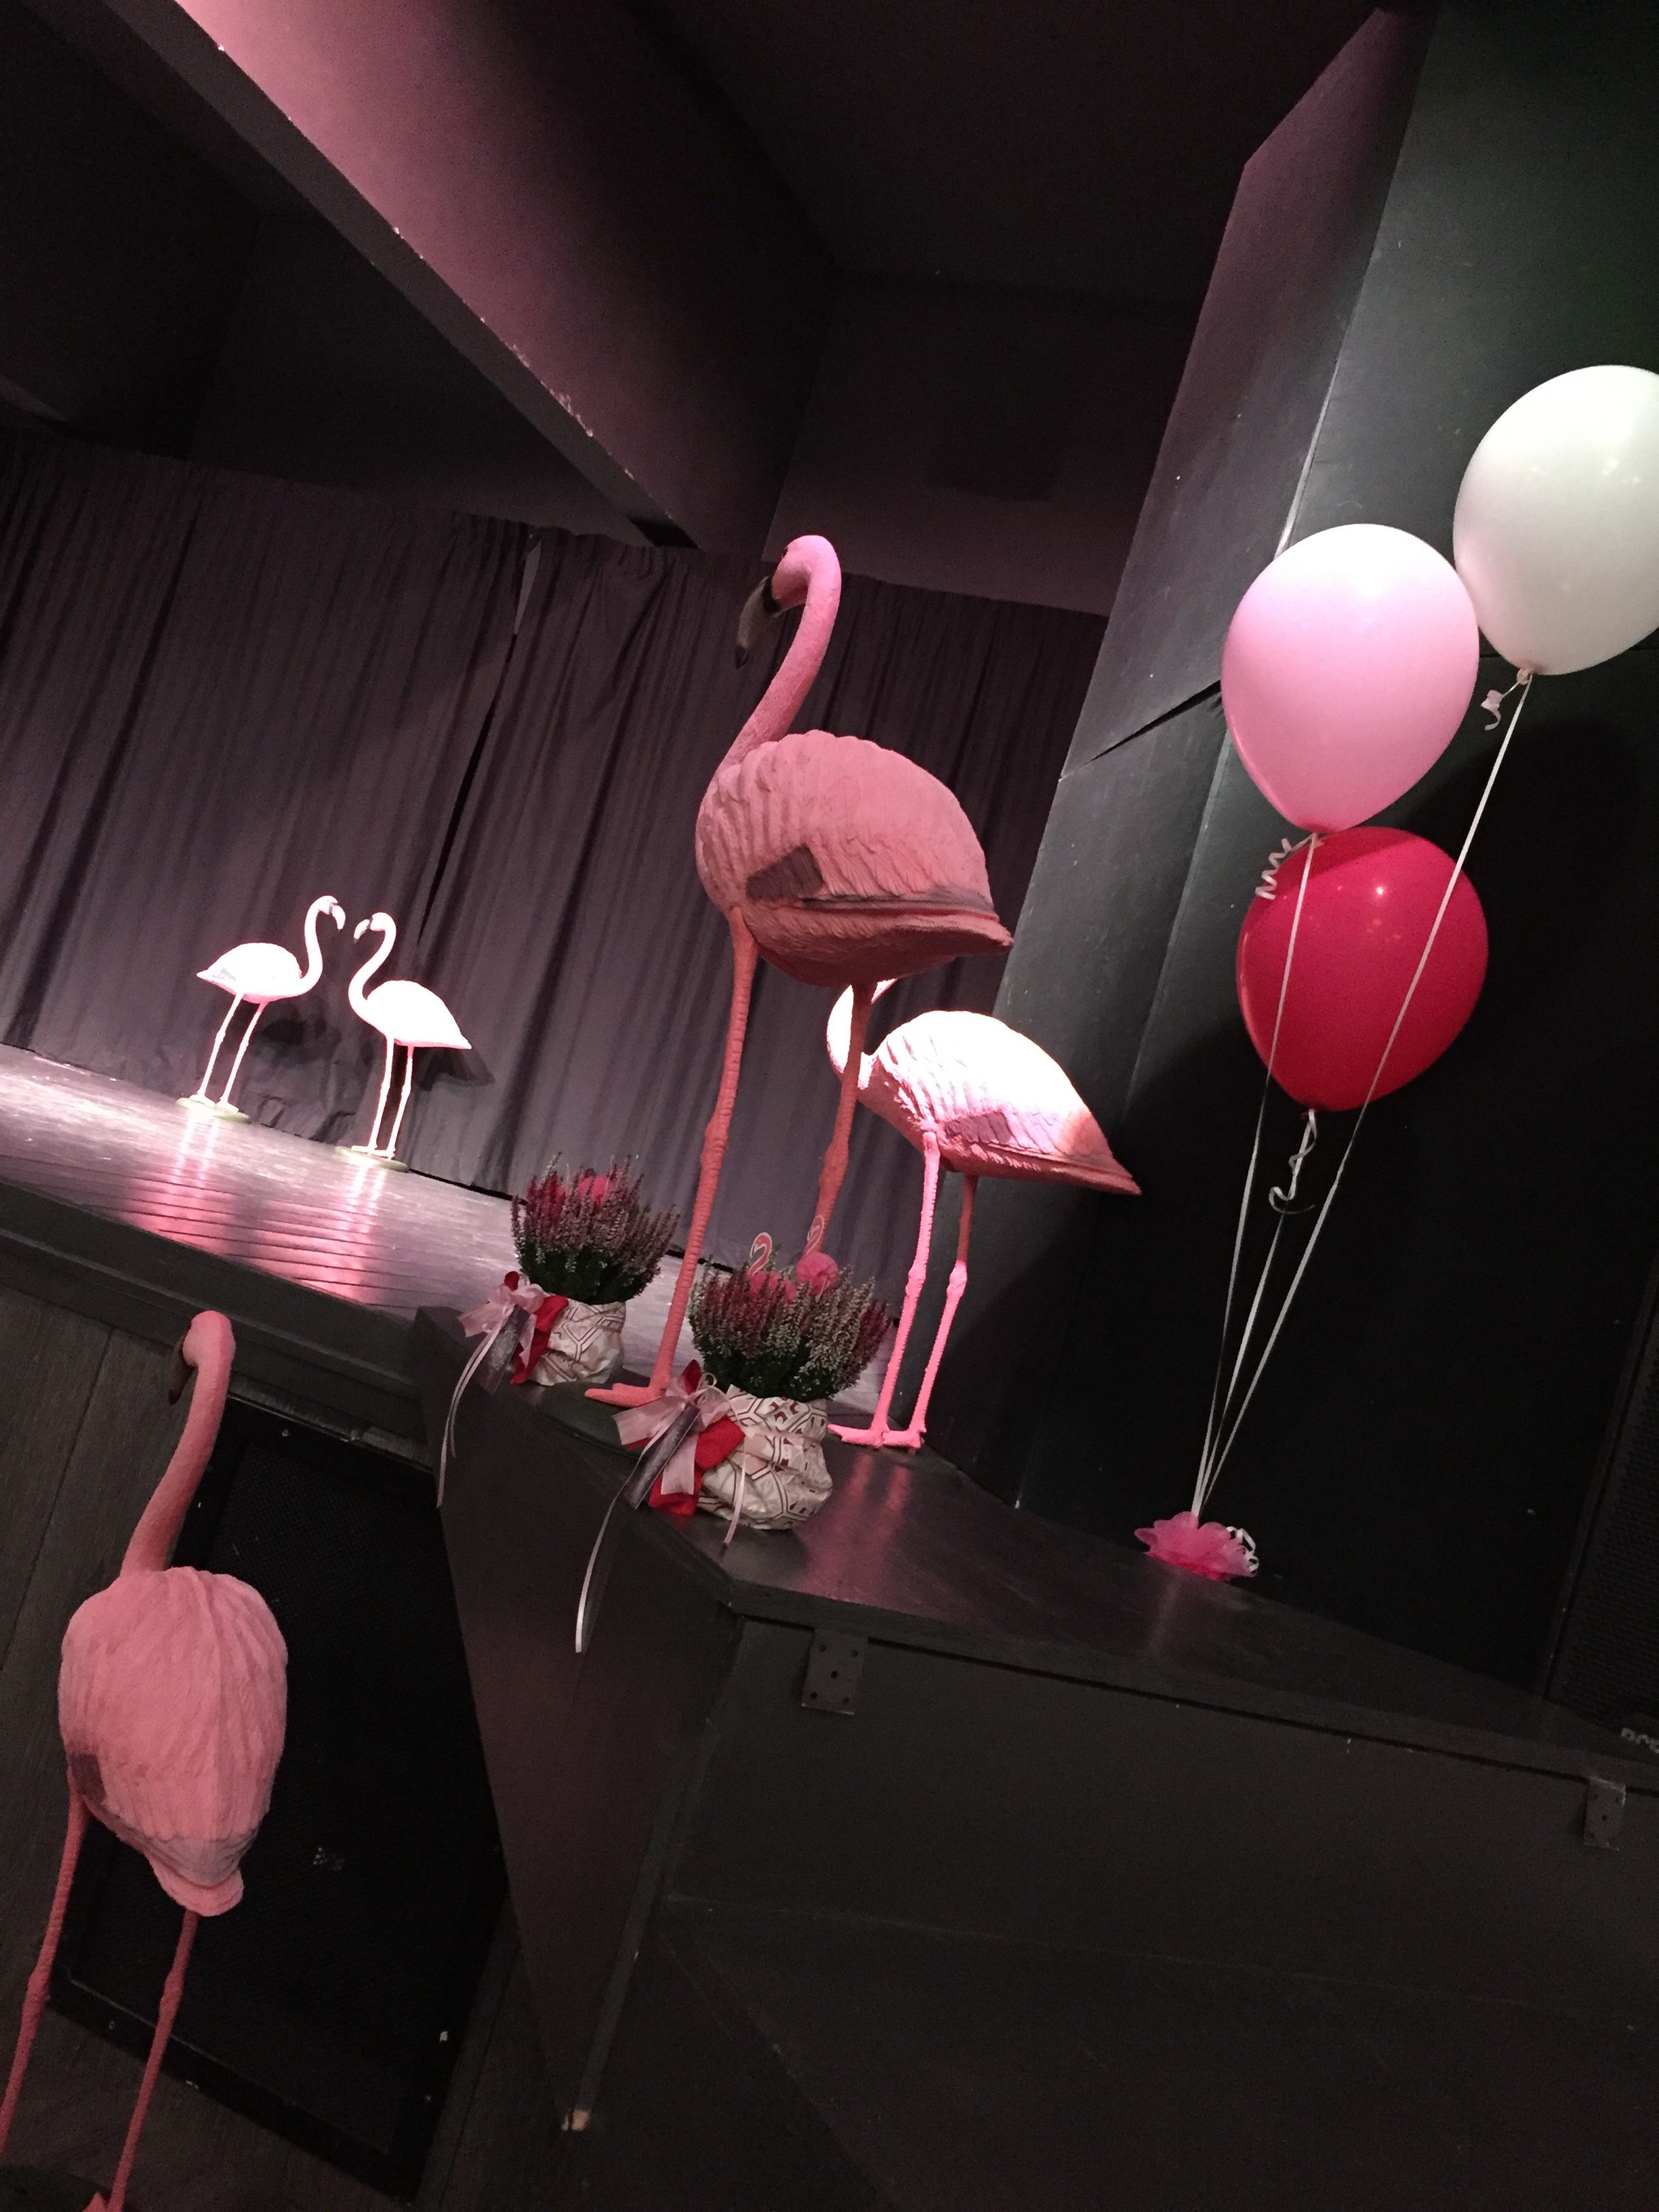 2018_09_28 - Cabaret & Burlesque Torino Festival "Amazing Flamingo" - La Madamina